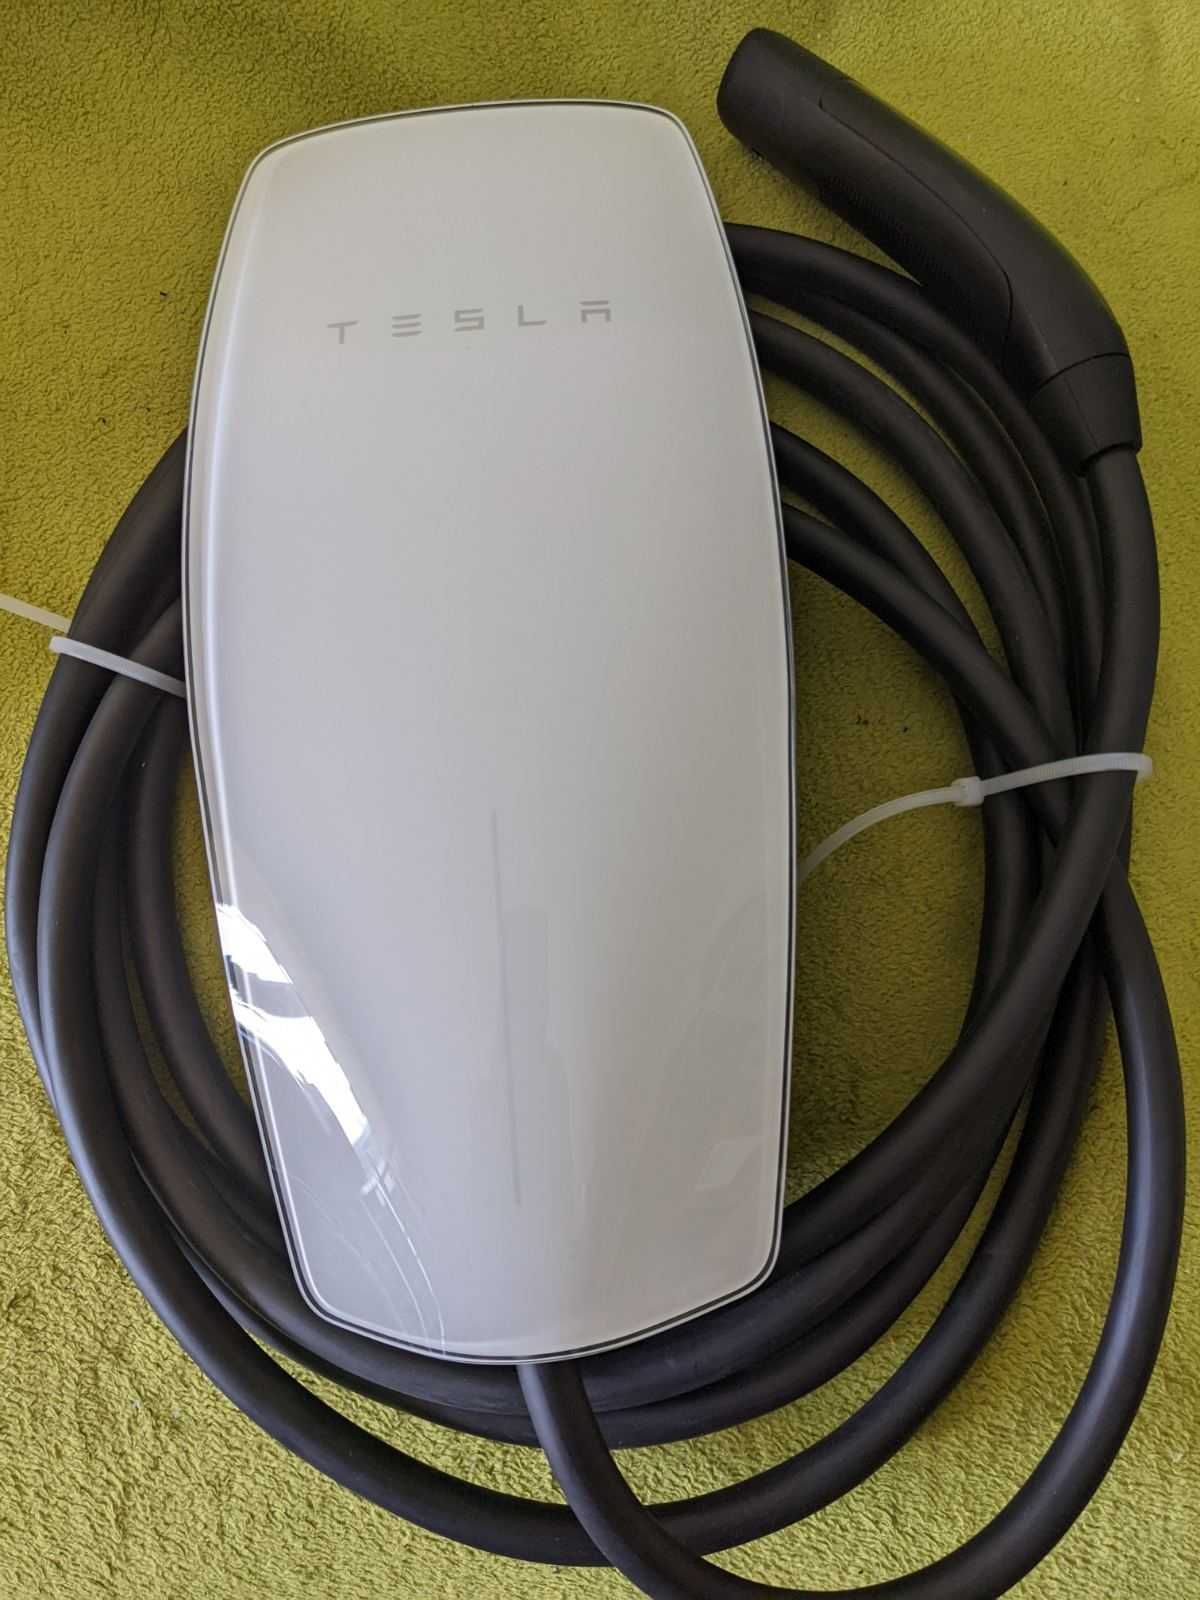 Tesla mobile charger / wall connector зарядное устройство оригинал